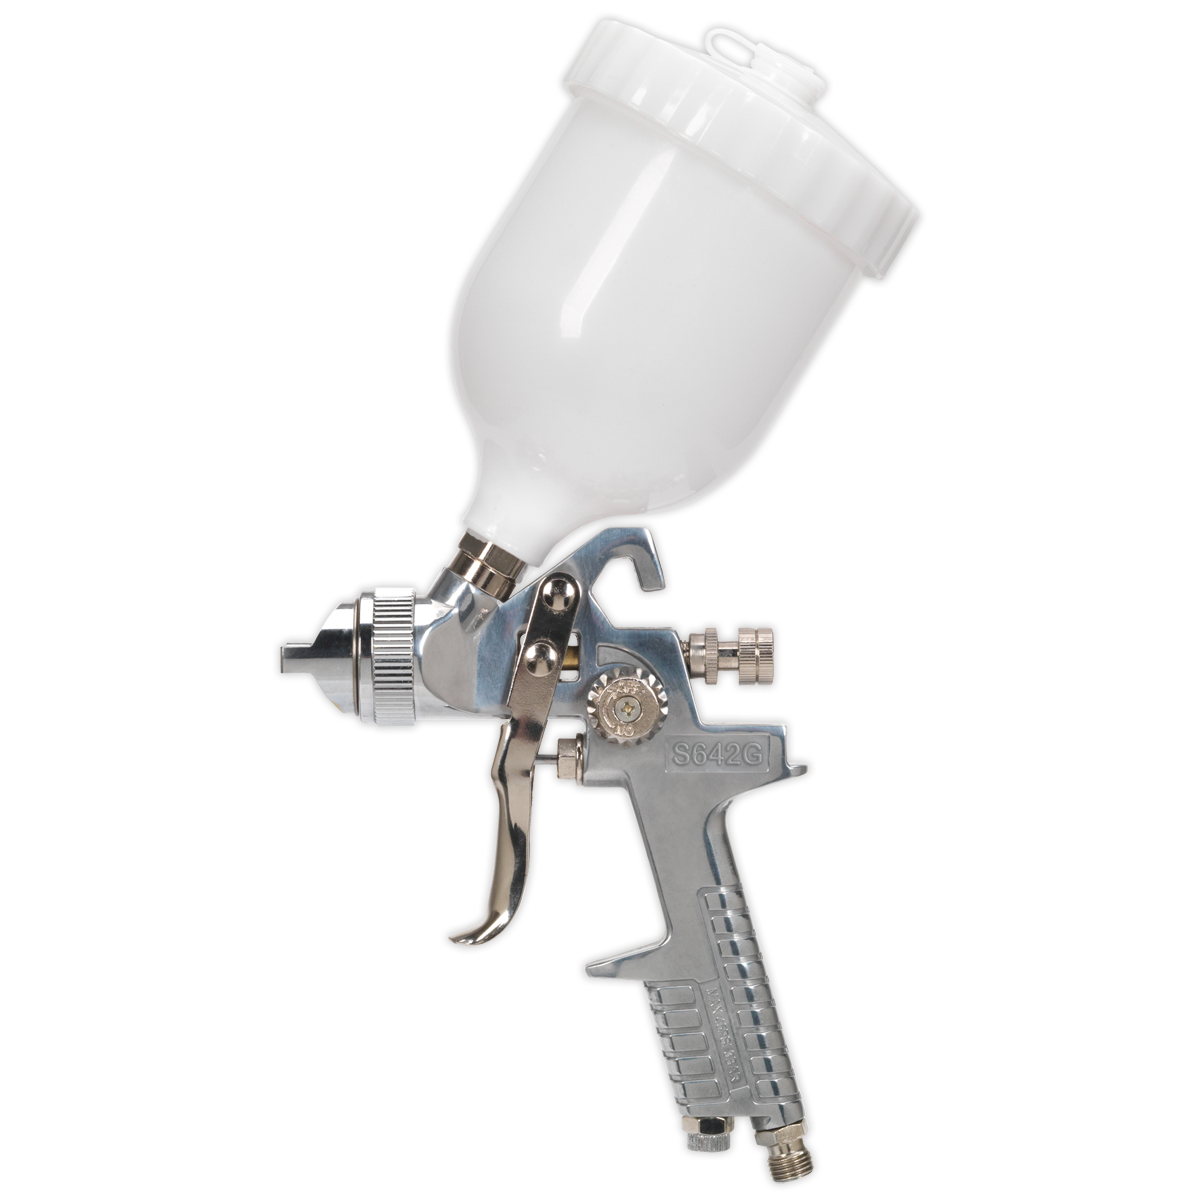 Spray Gun Gravity Feed - 1.8mm Set-Up - S642G - Farming Parts